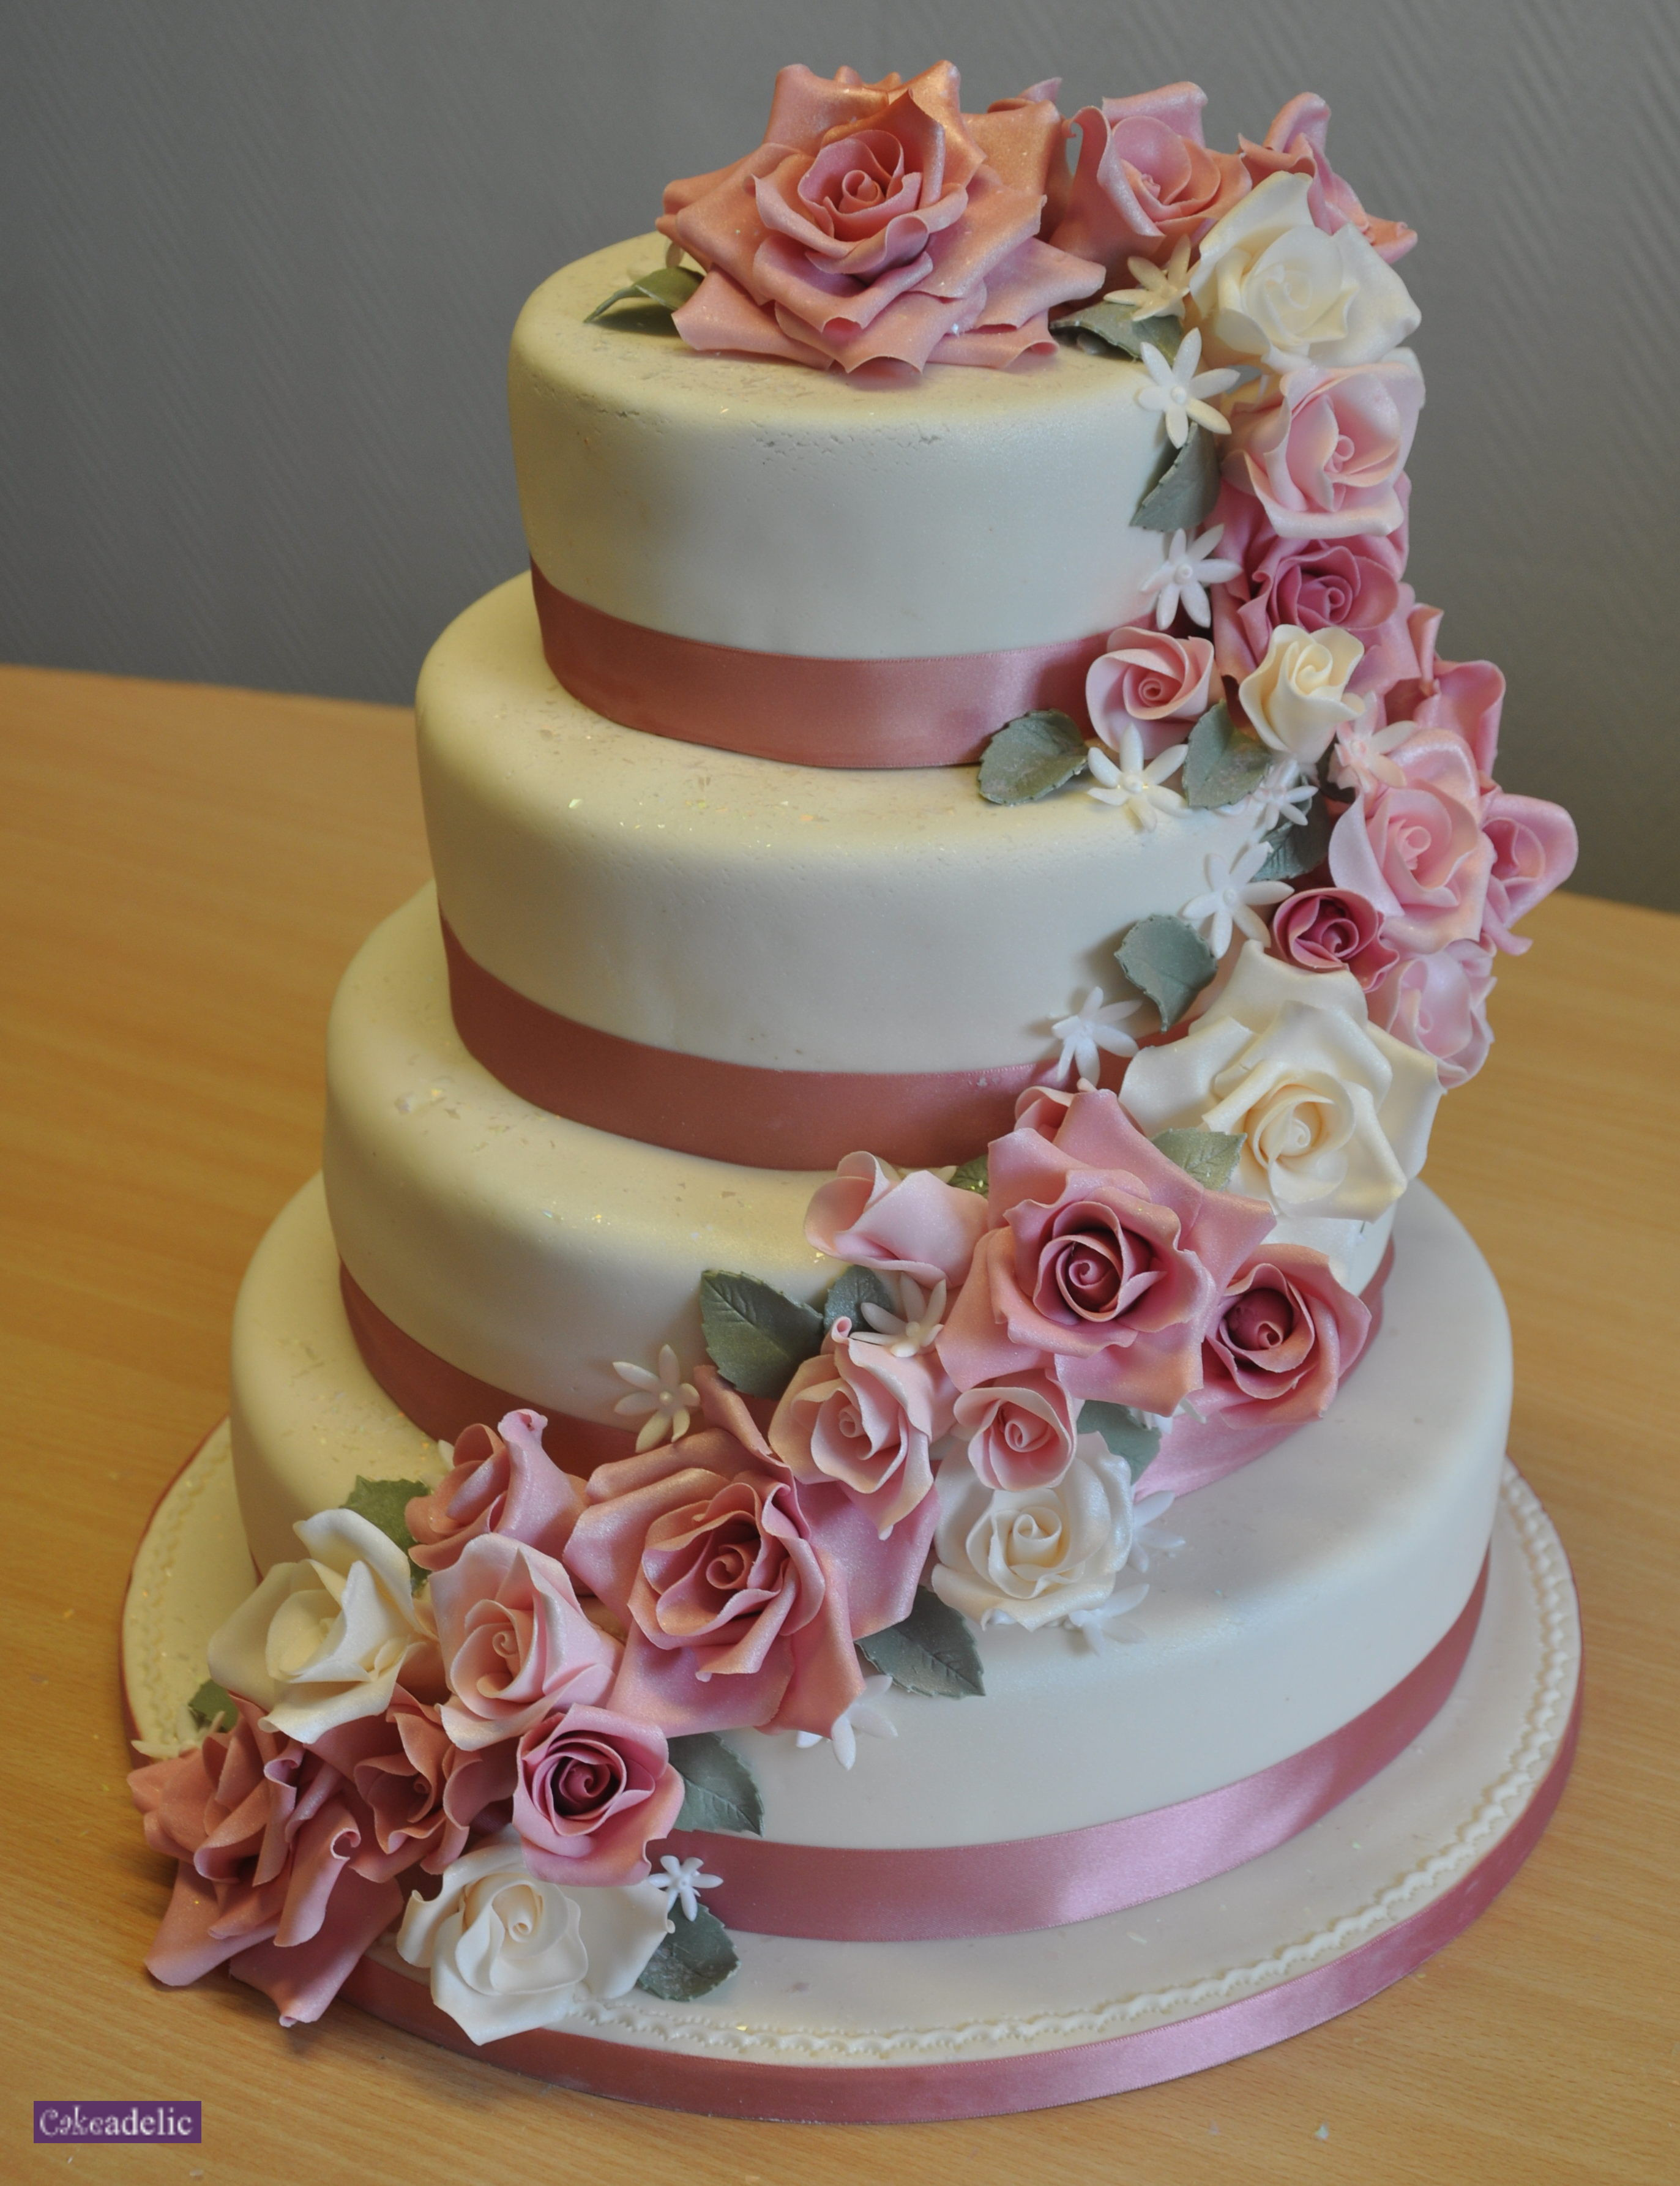 4 Layered Wedding Cakes
 4 layer wedding cake idea in 2017